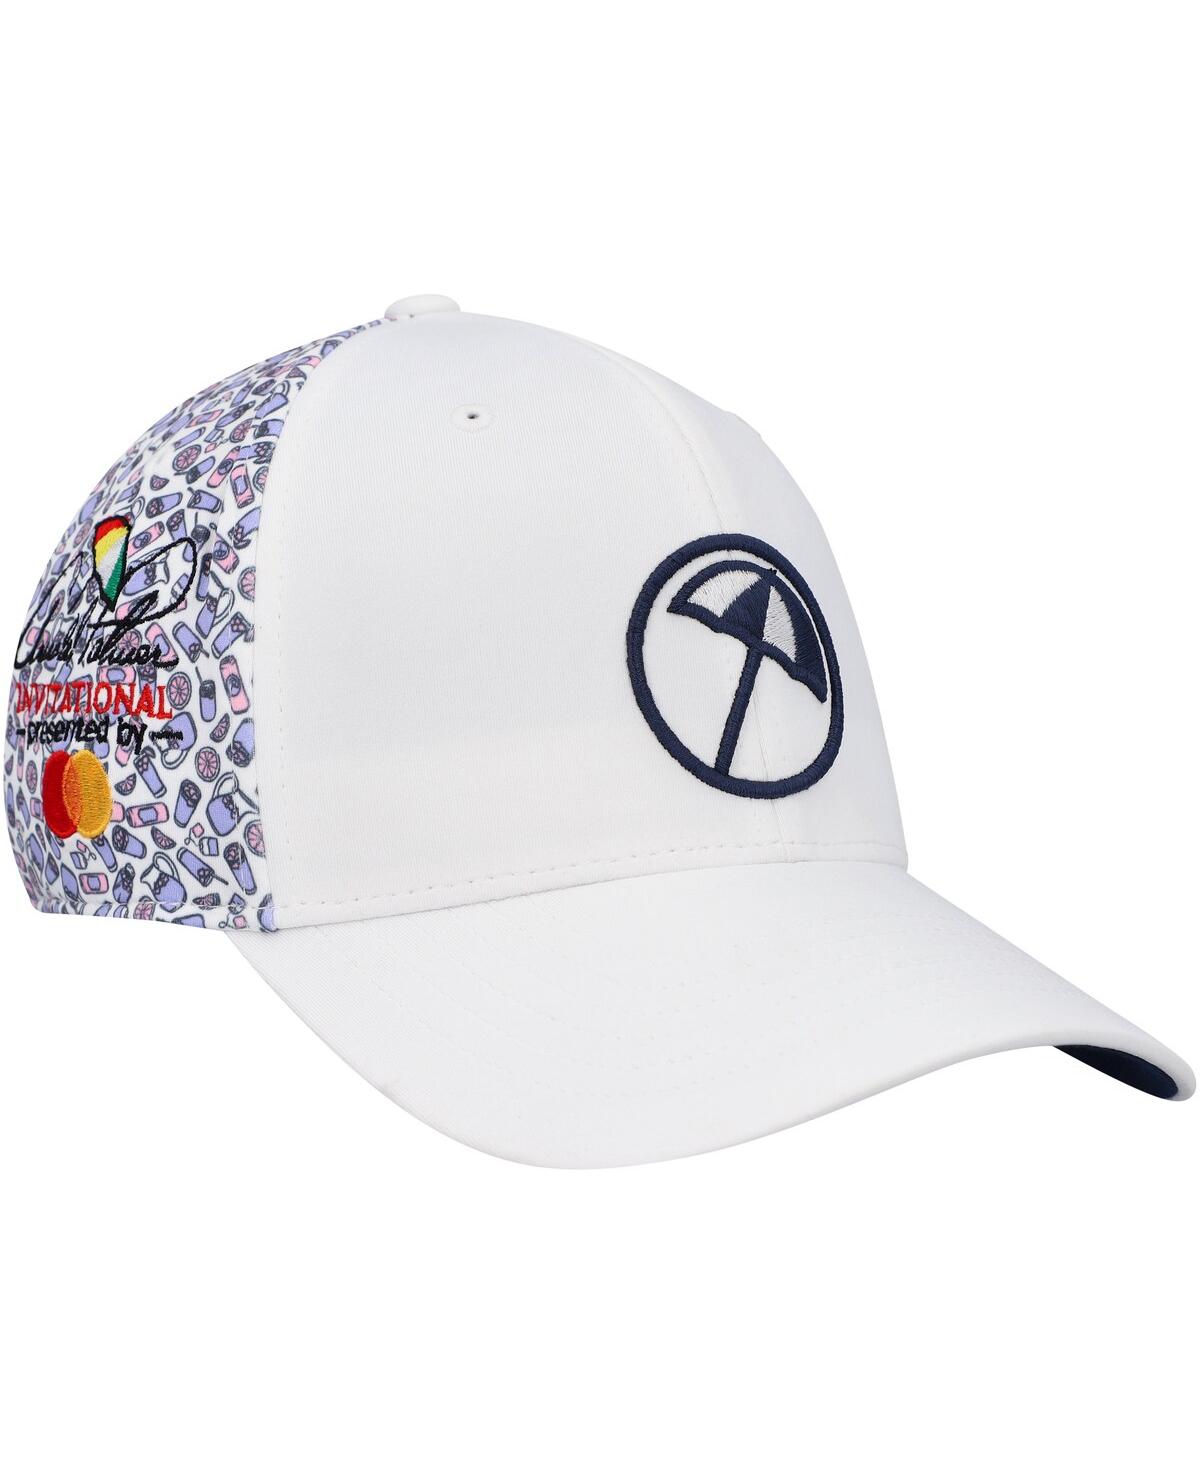 Men's Puma White Arnold Palmer Invitational Drinks Adjustable Hat - White